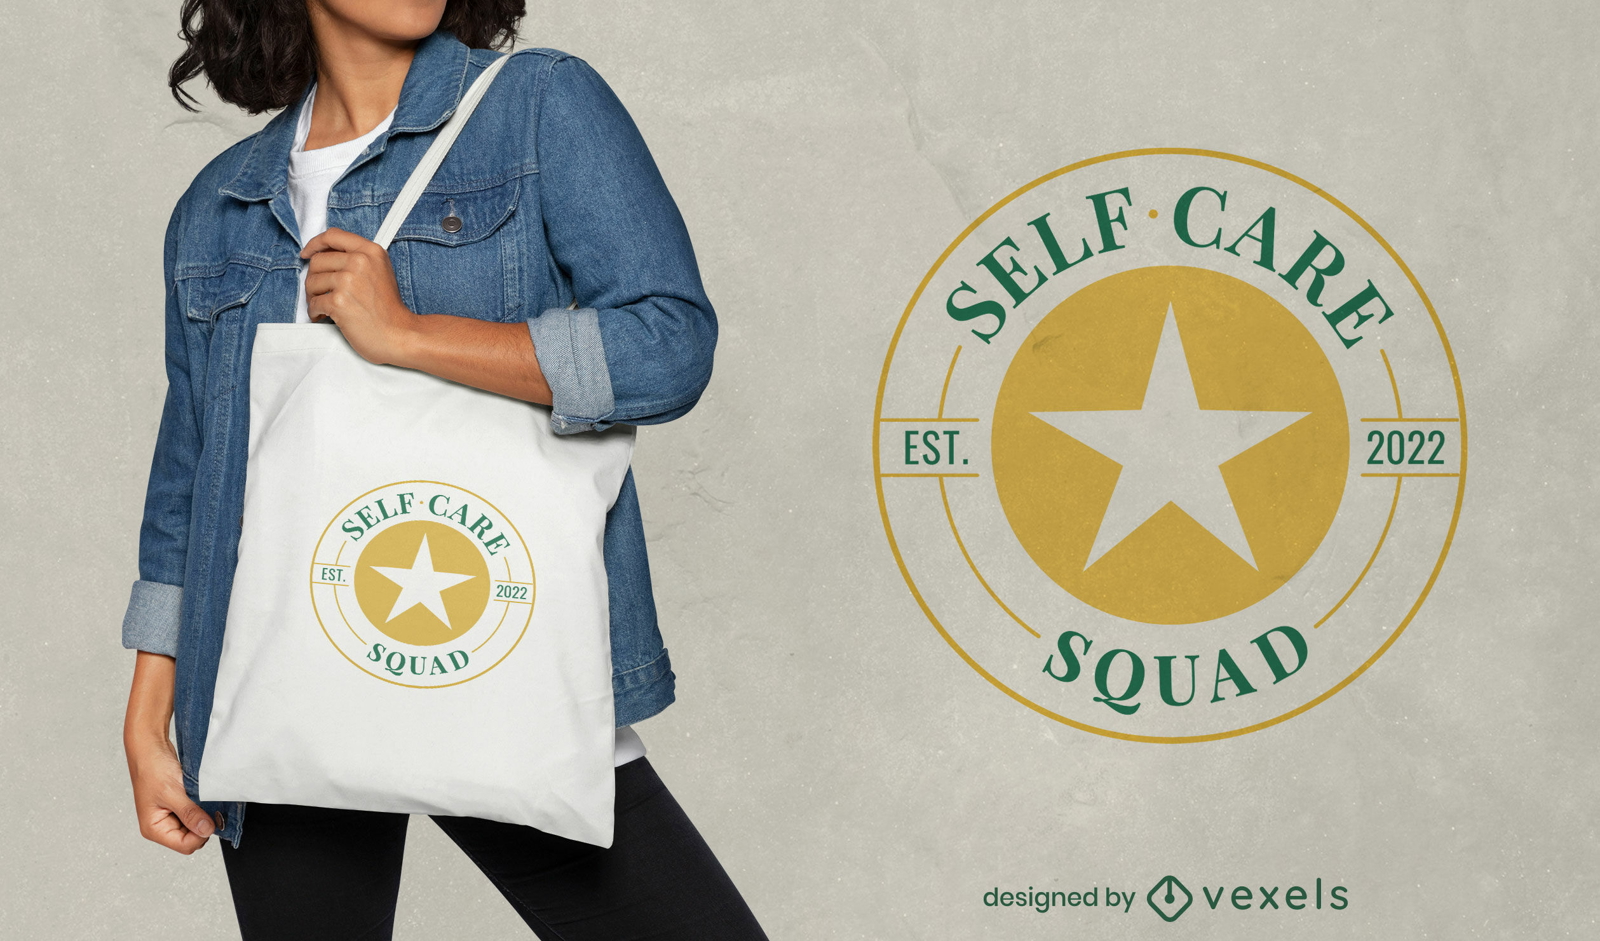 Self care squad vacation tote bag design